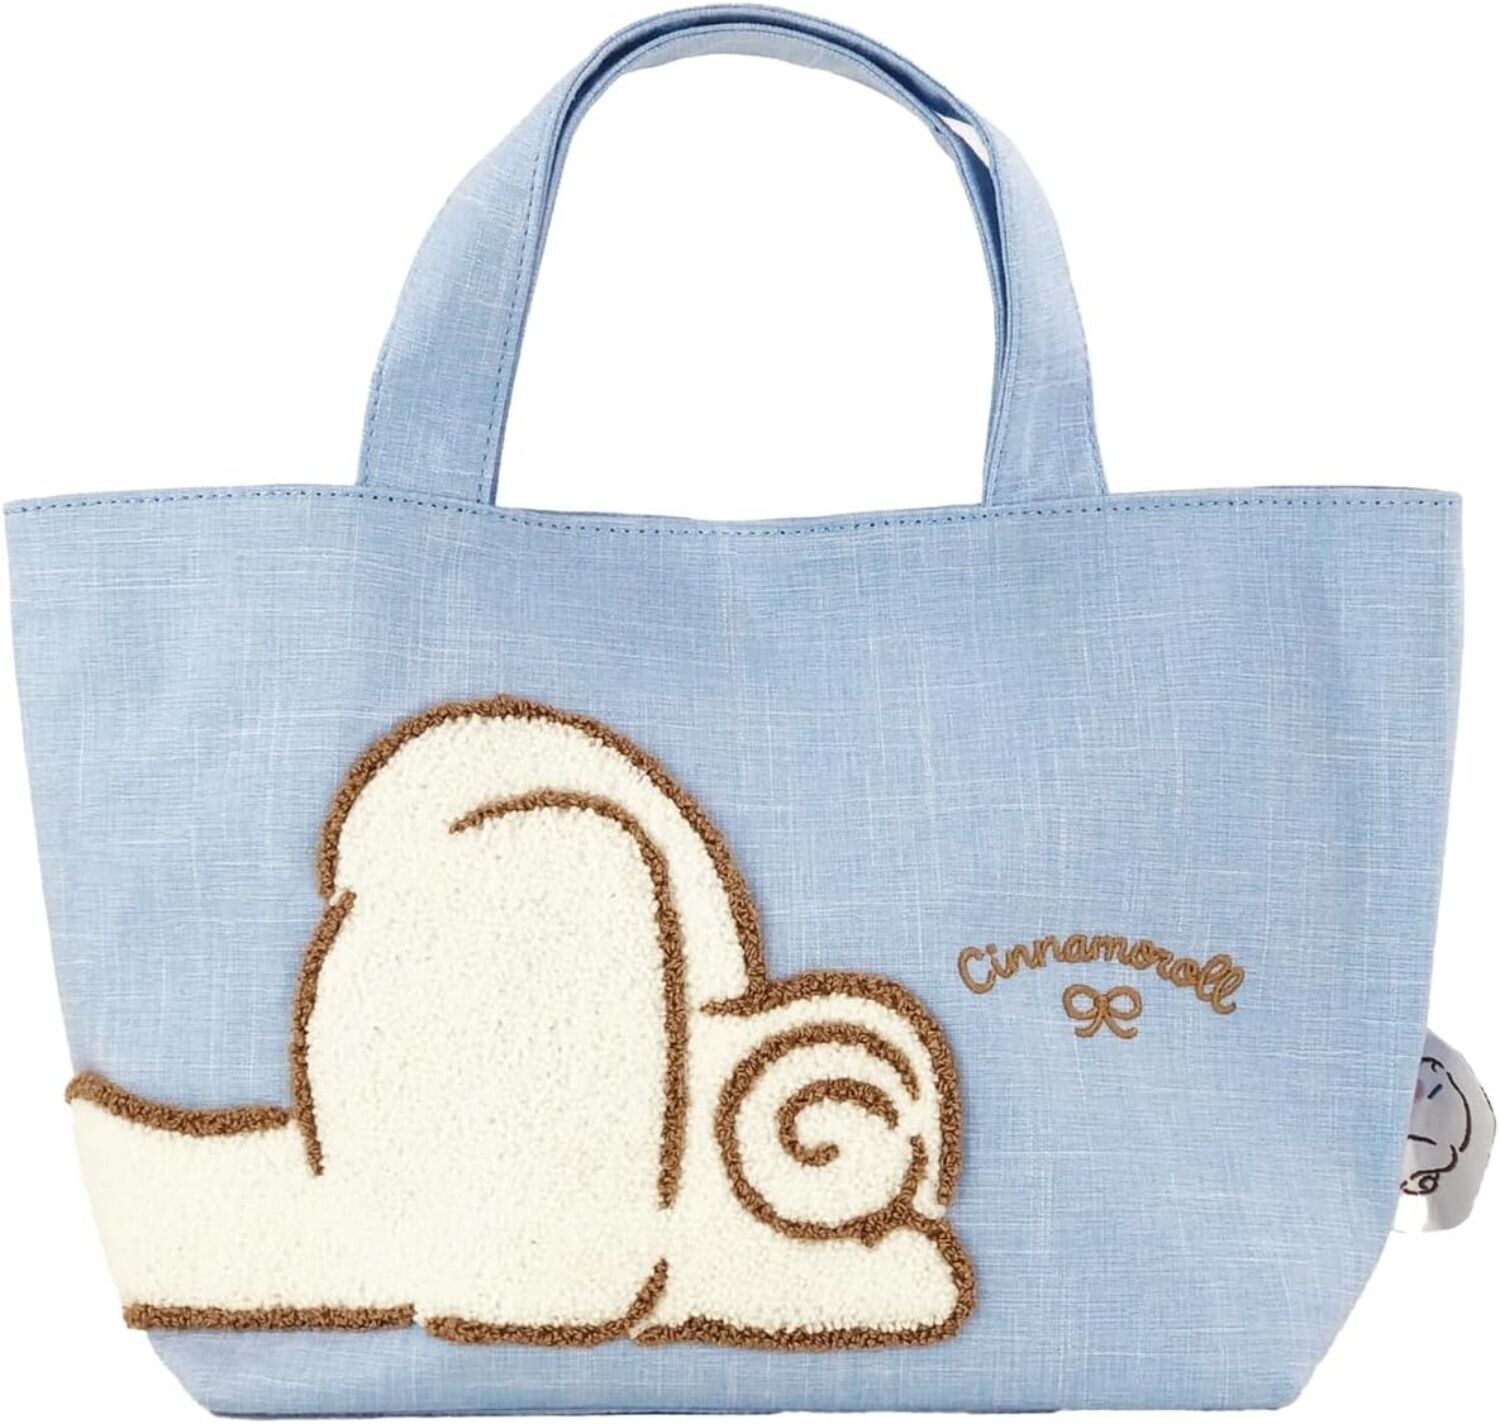 Sanrio Character Cinnamoroll Sagara Embroidery Tote Bag (Dararin) New Japan